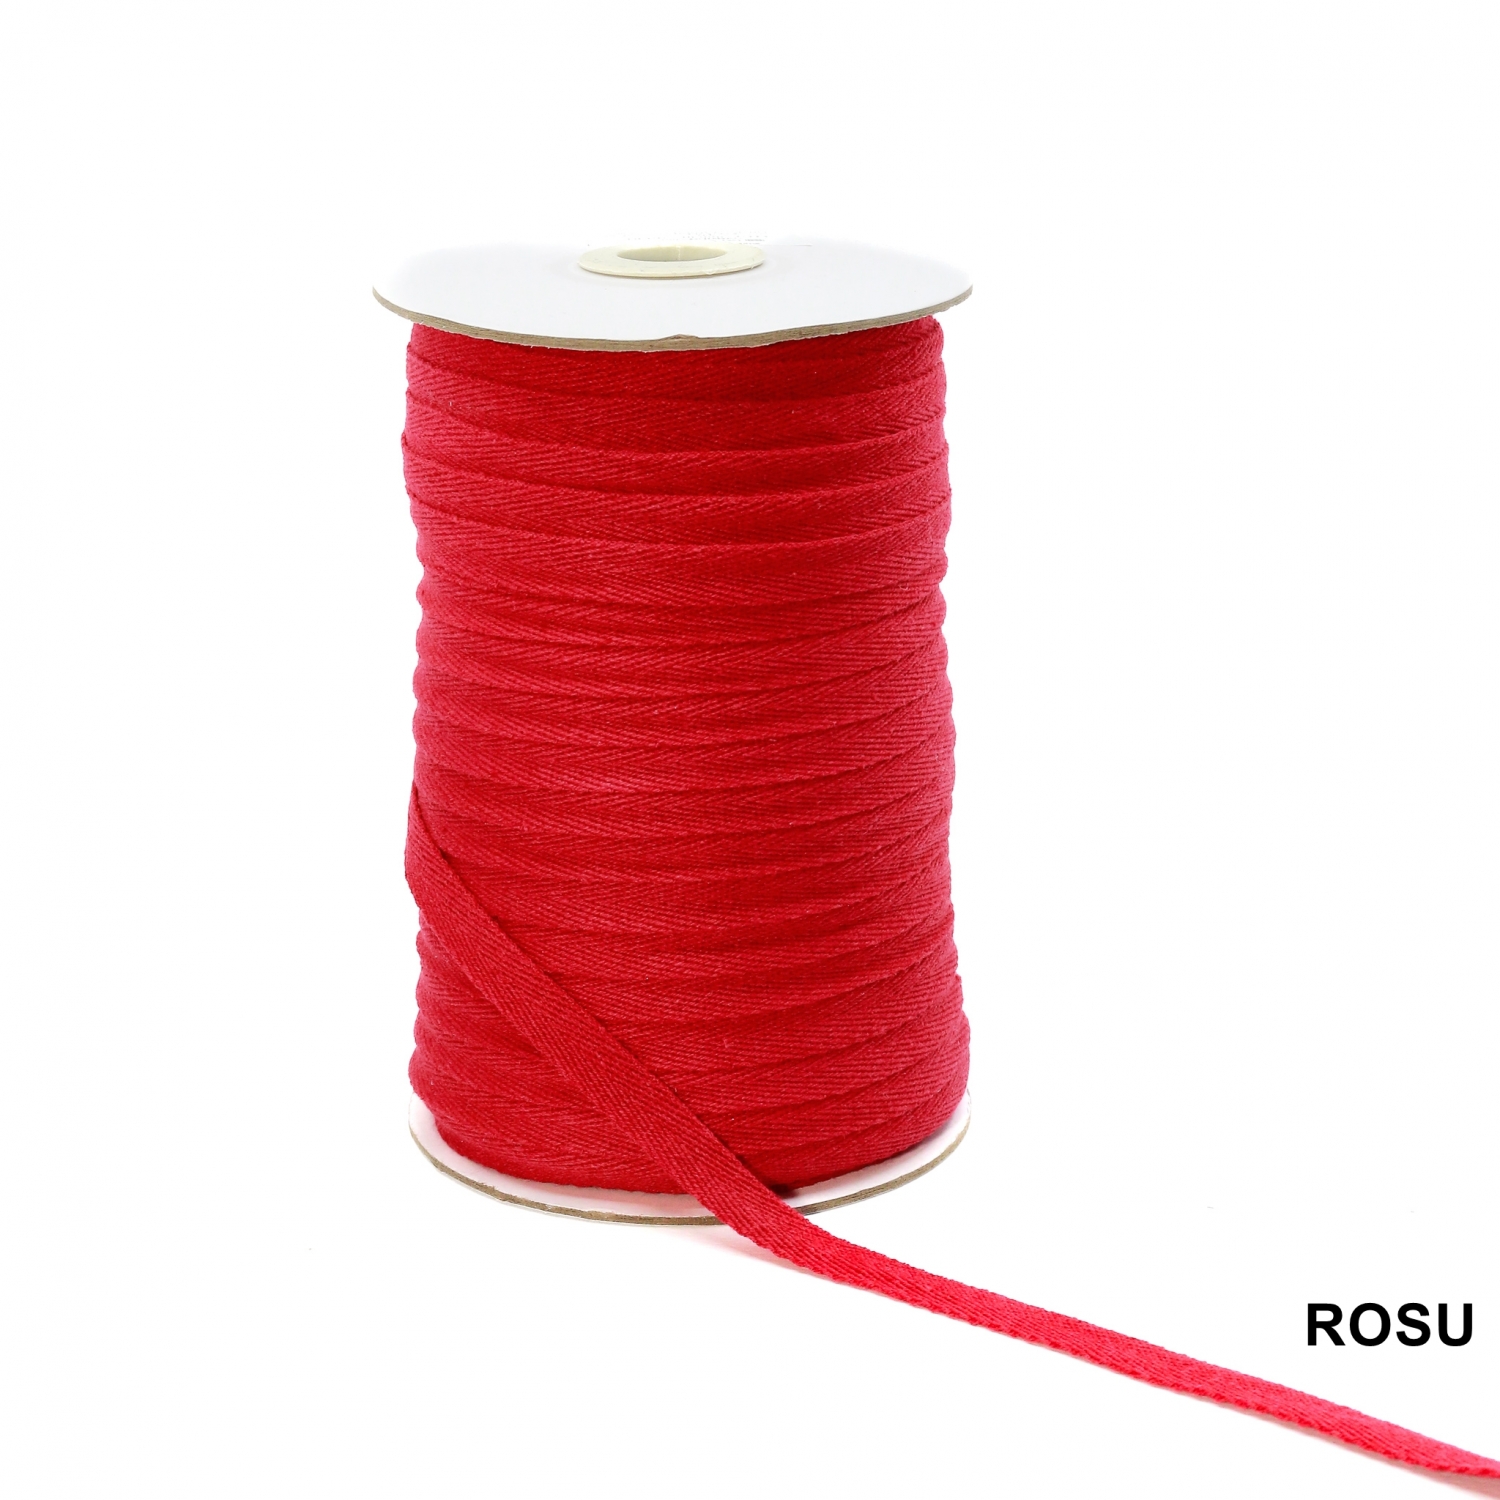 Decorative Cotton Tape, Herringbone, Red, width 10 mm (100 meters/roll)